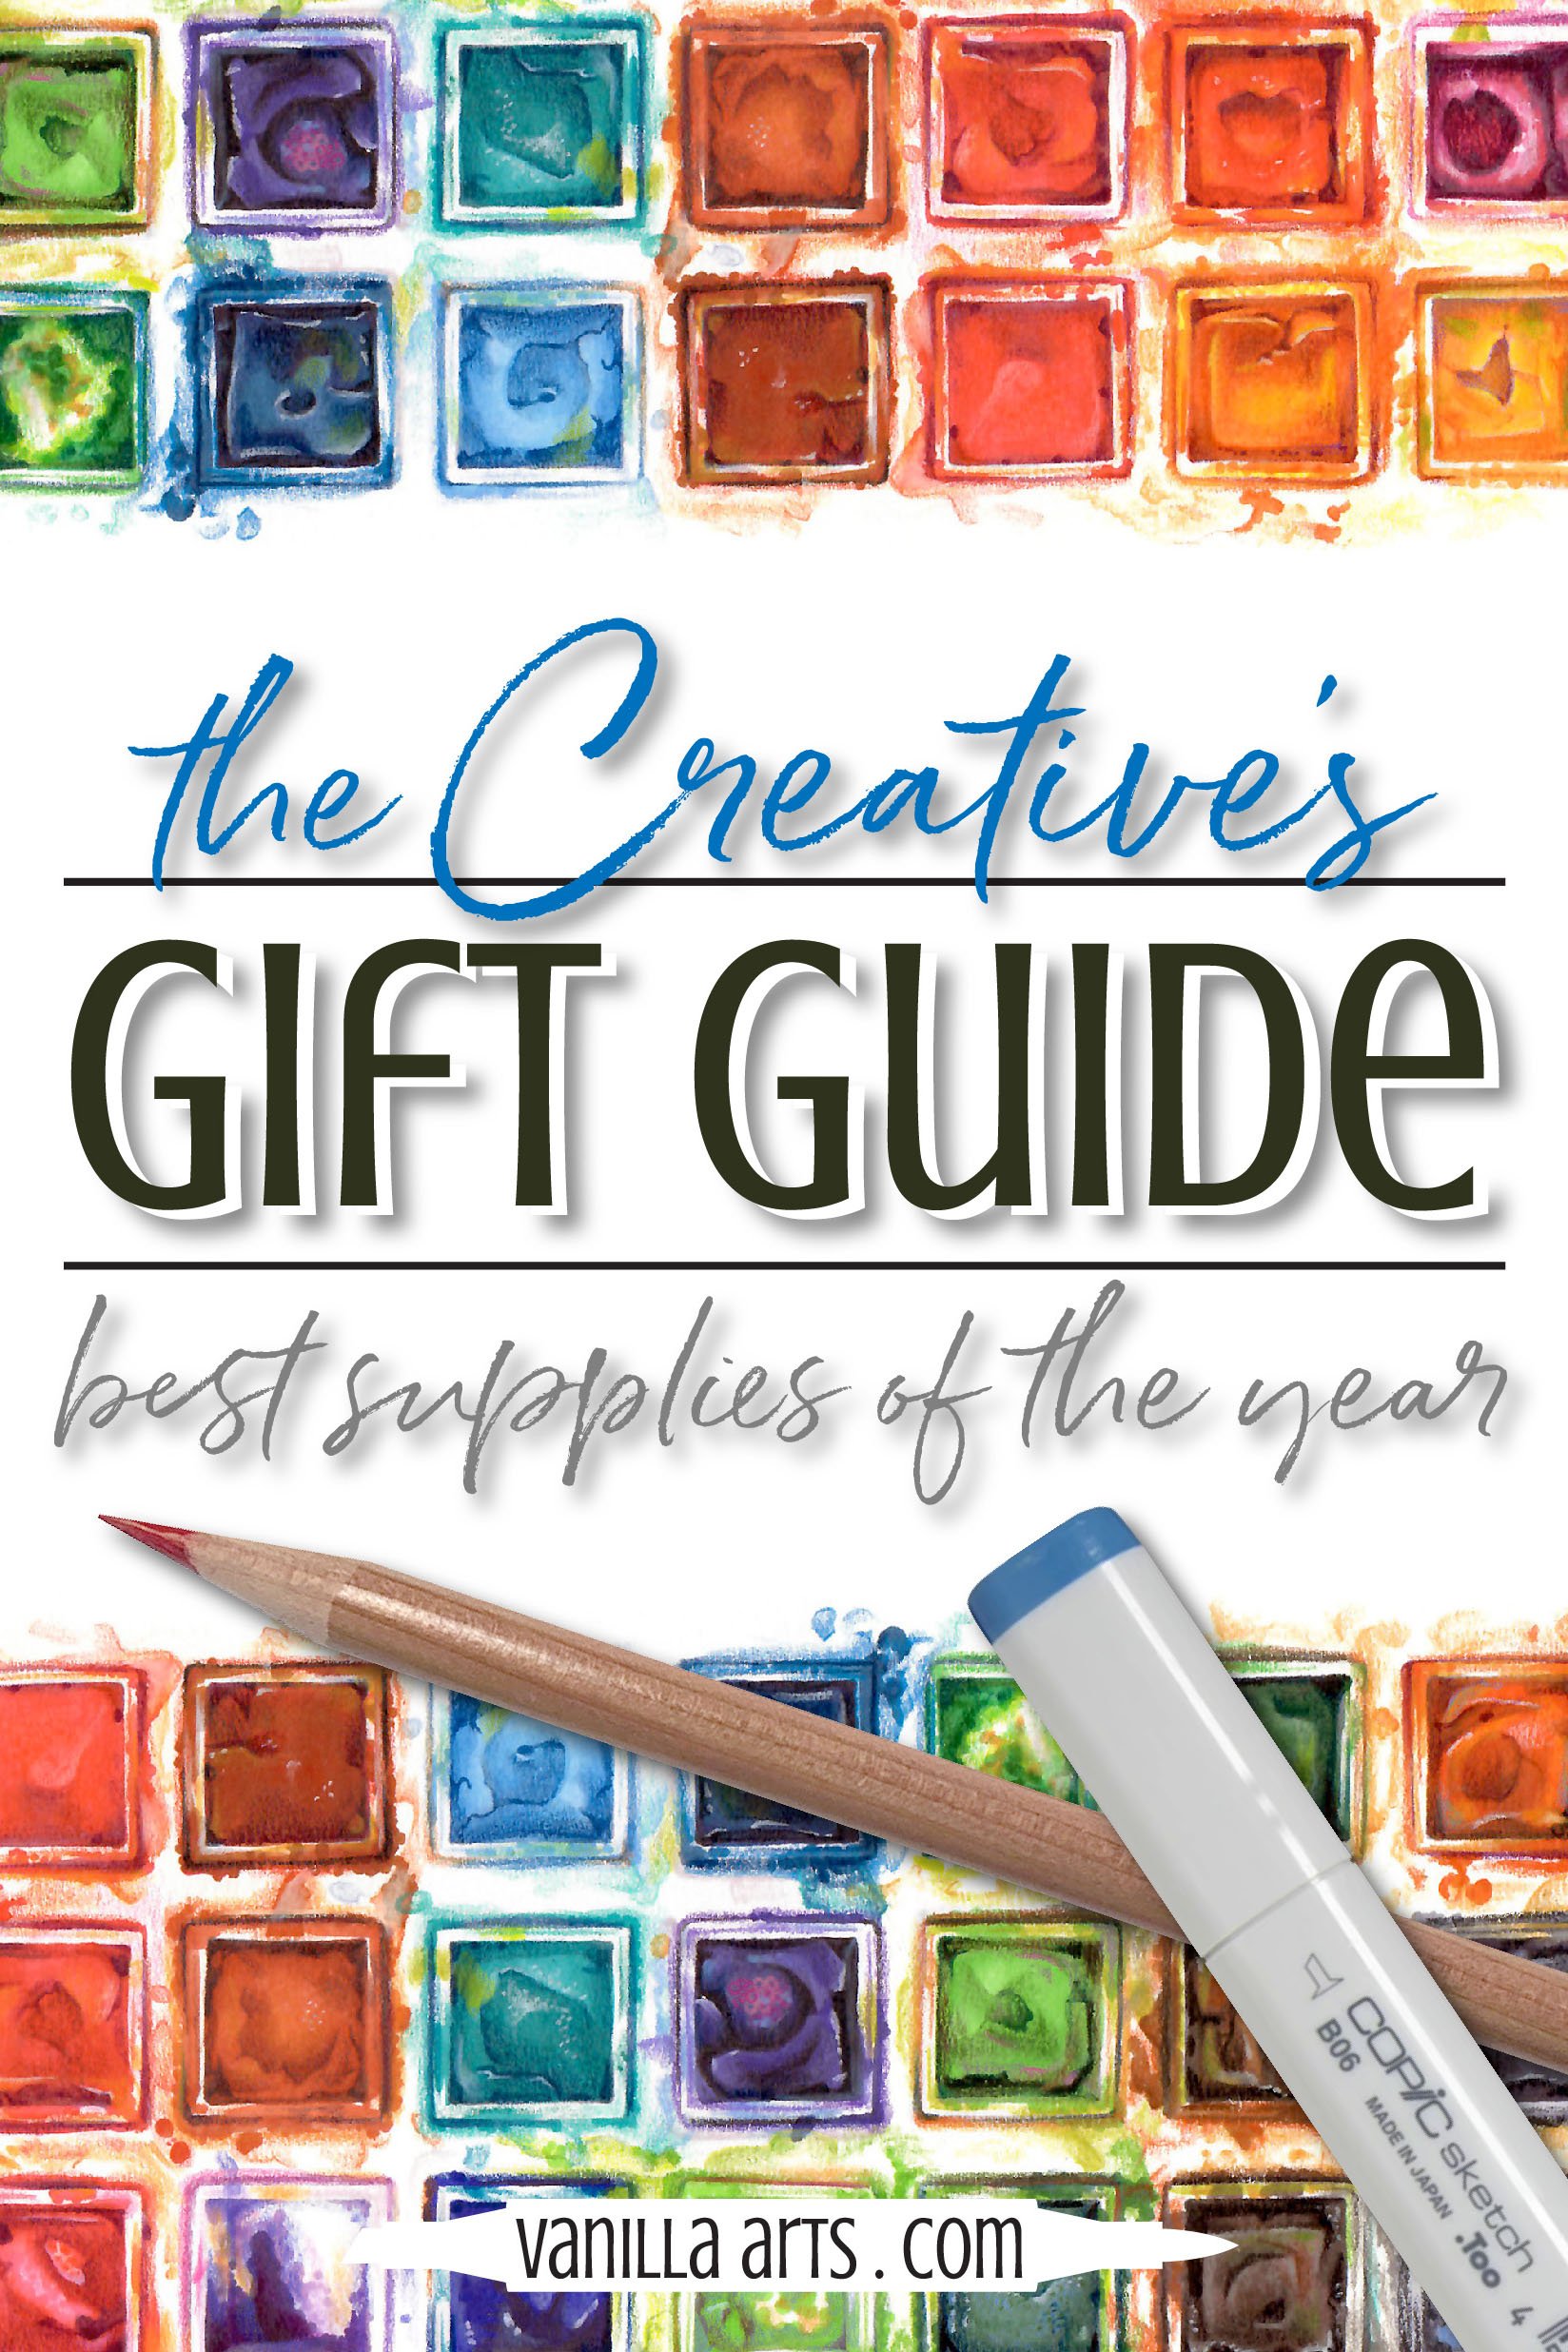 https://images.squarespace-cdn.com/content/v1/54ef7abde4b0b483325a0554/1637175622531-0PZVQPZJMZ4EQPDEUAAM/Gift+Guide+Best+of.jpg